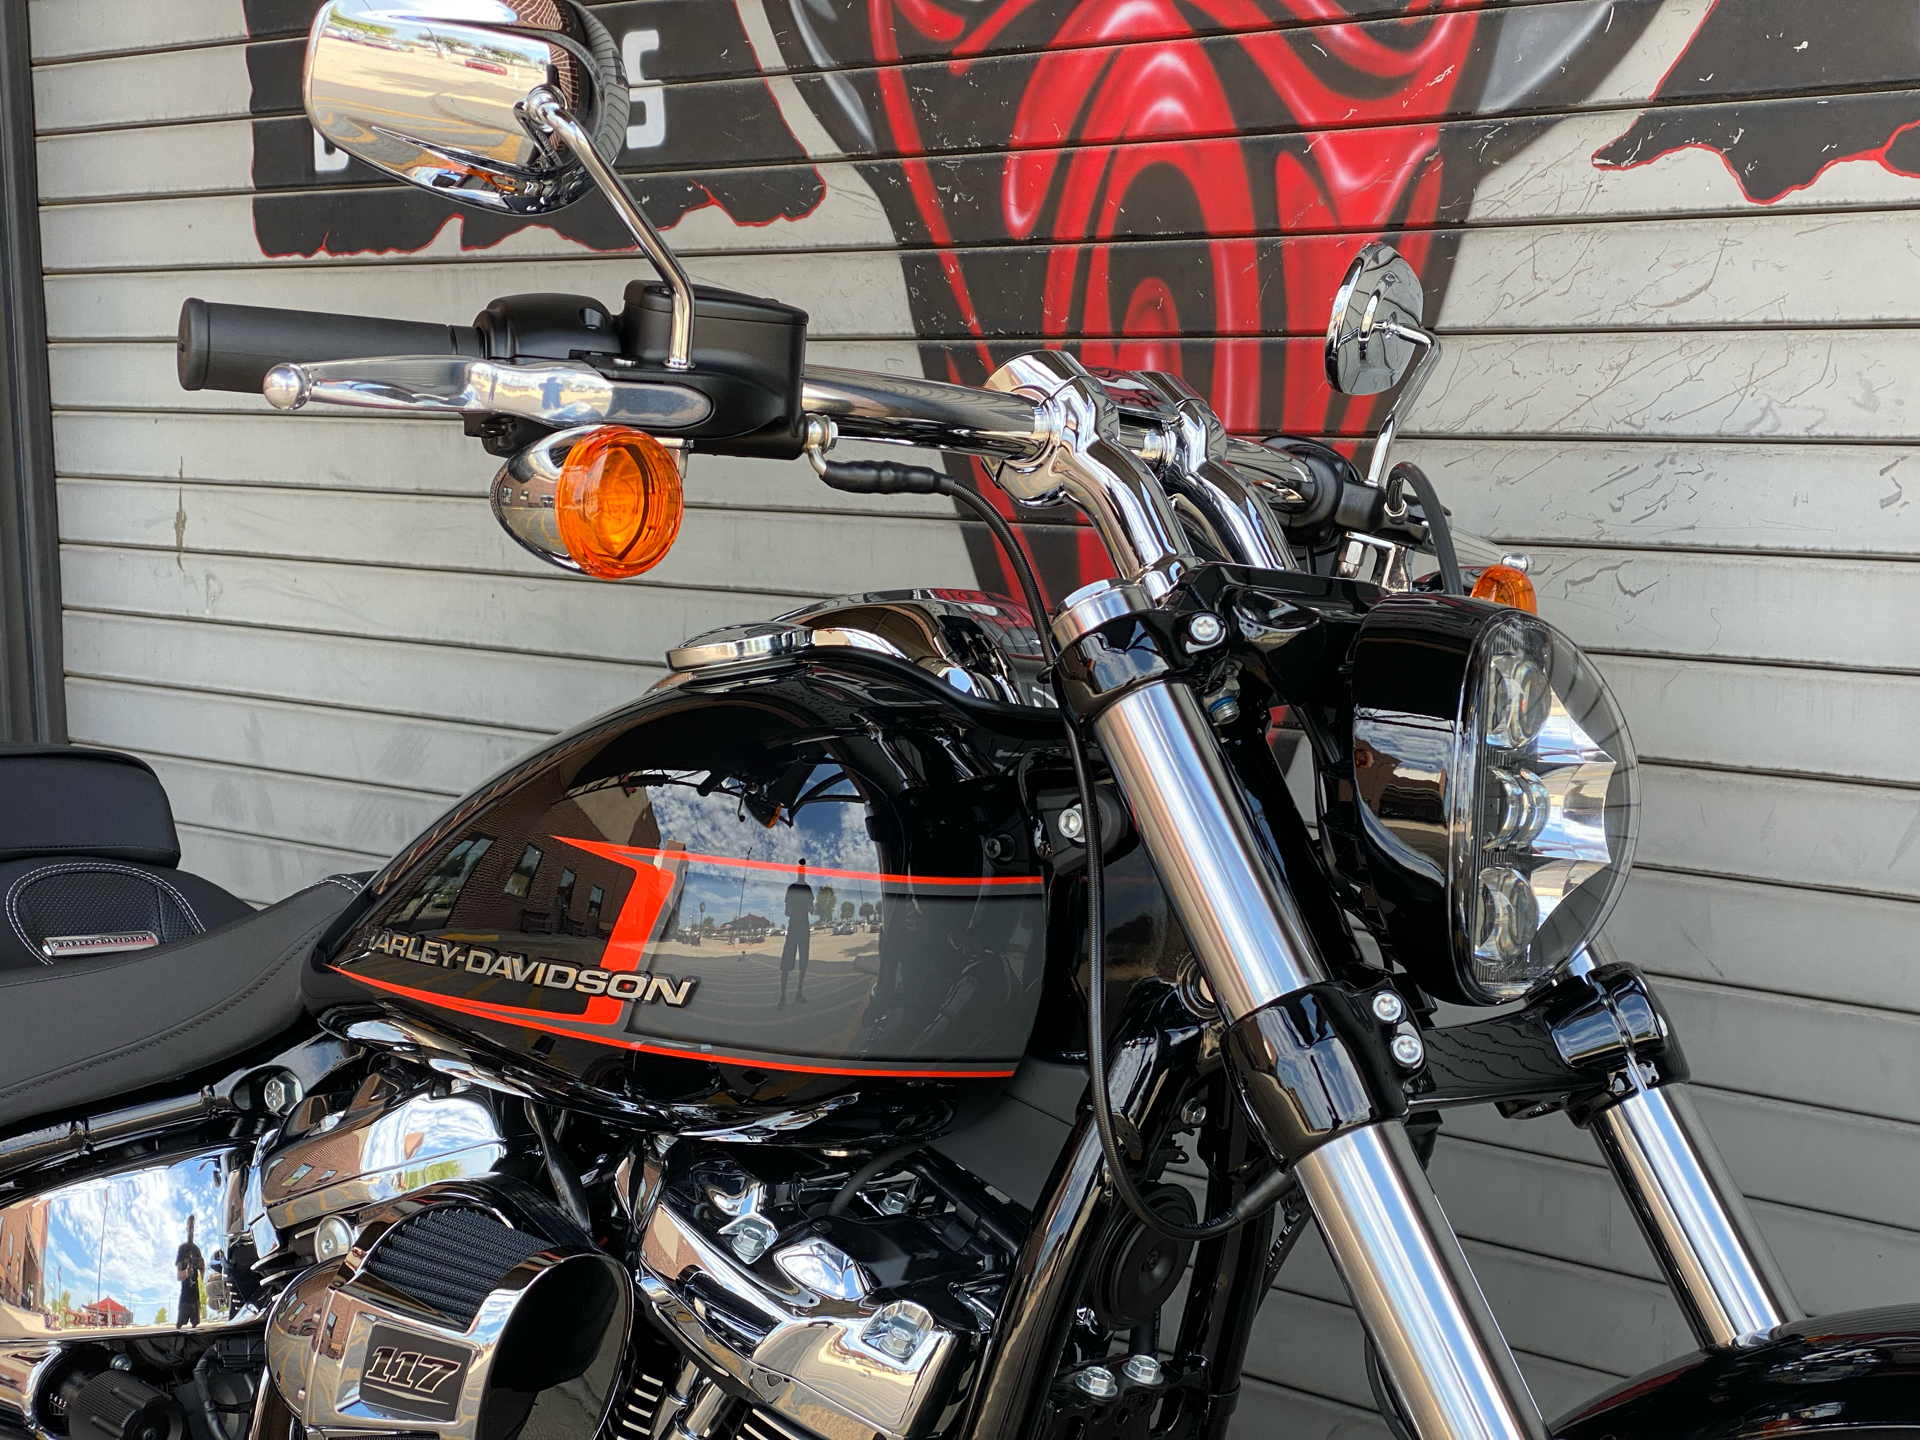 2023 Harley-Davidson Breakout® in Carrollton, Texas - Photo 2